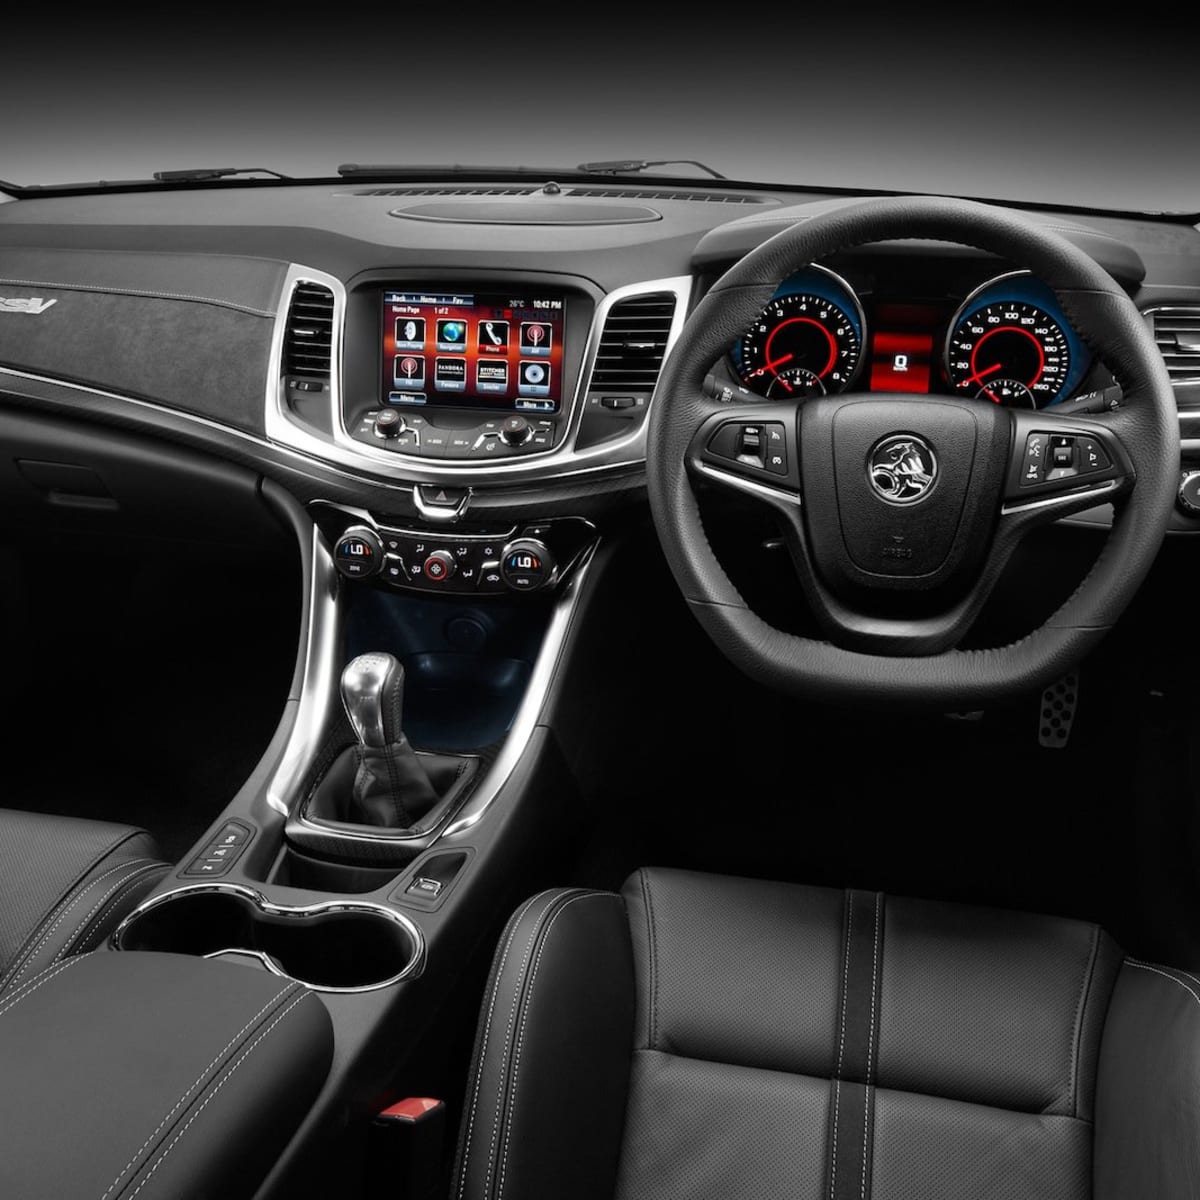 Holden Vf Commodore Ss Interior Revealed Caradvice